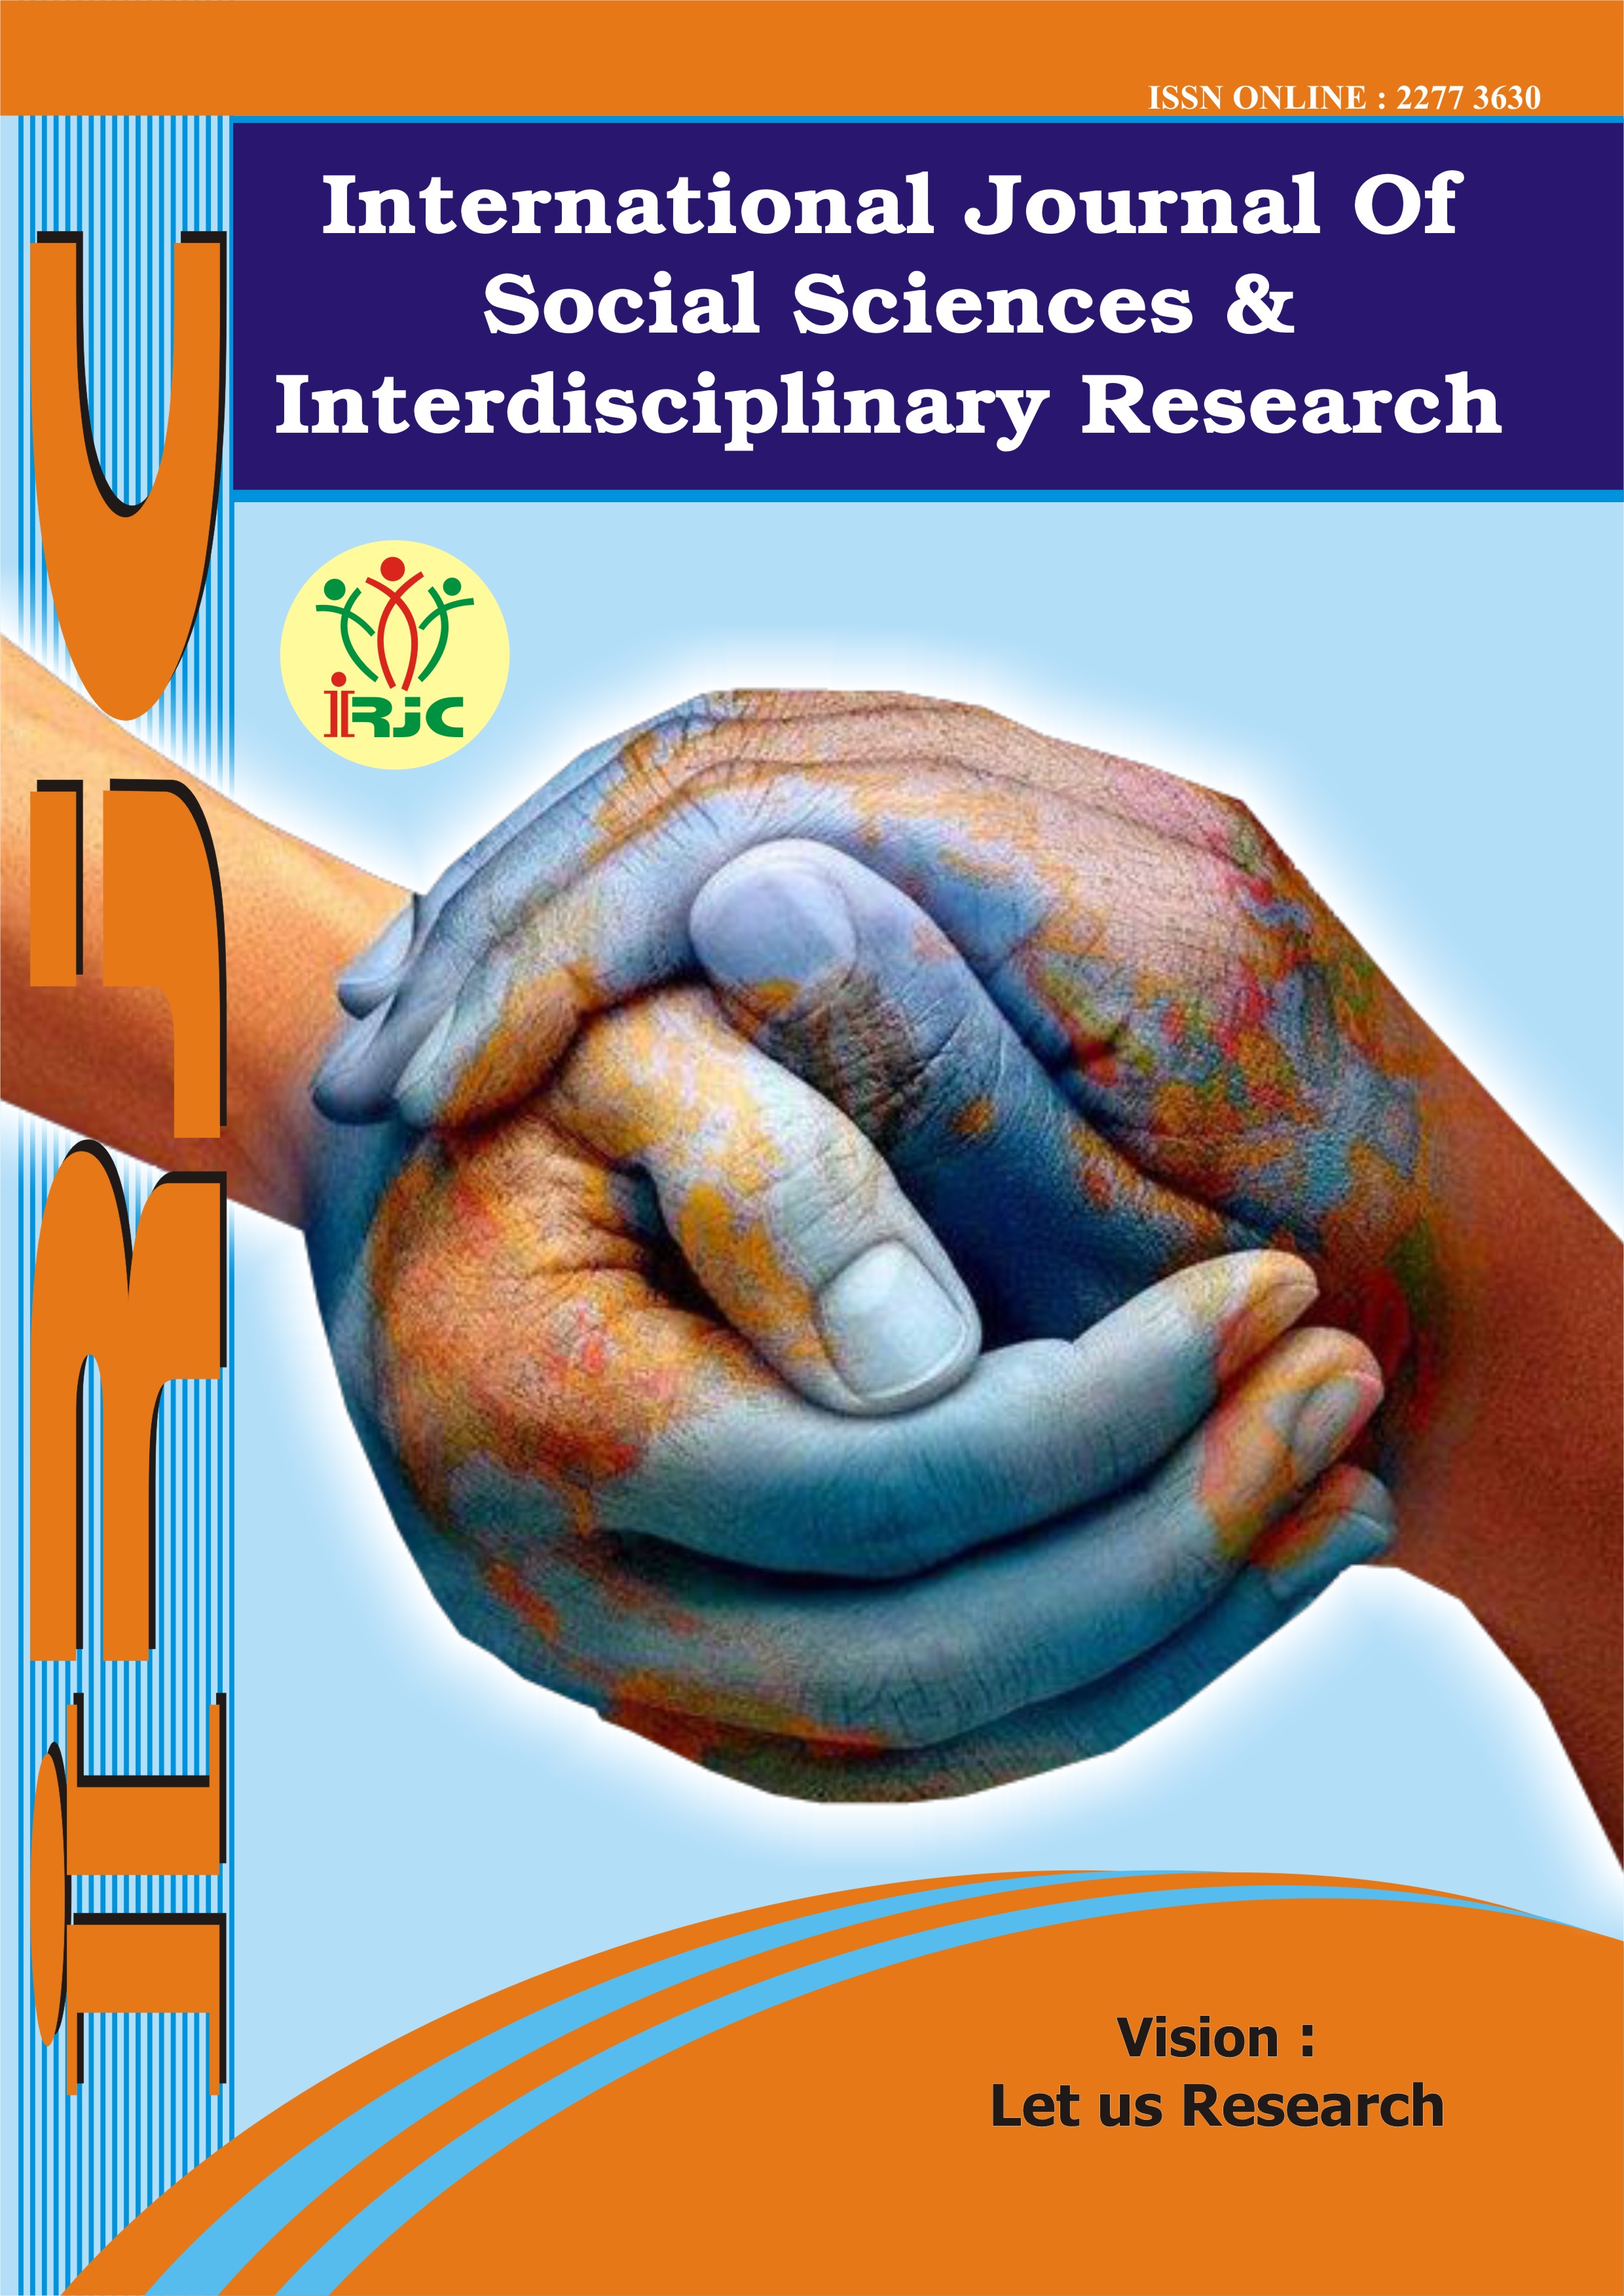 					View Vol. 11 No. 12 (2022): INTERNATIONAL JOURNAL OF SOCIAL SCIENCE & INTERDISCIPLINARY RESEARCH
				